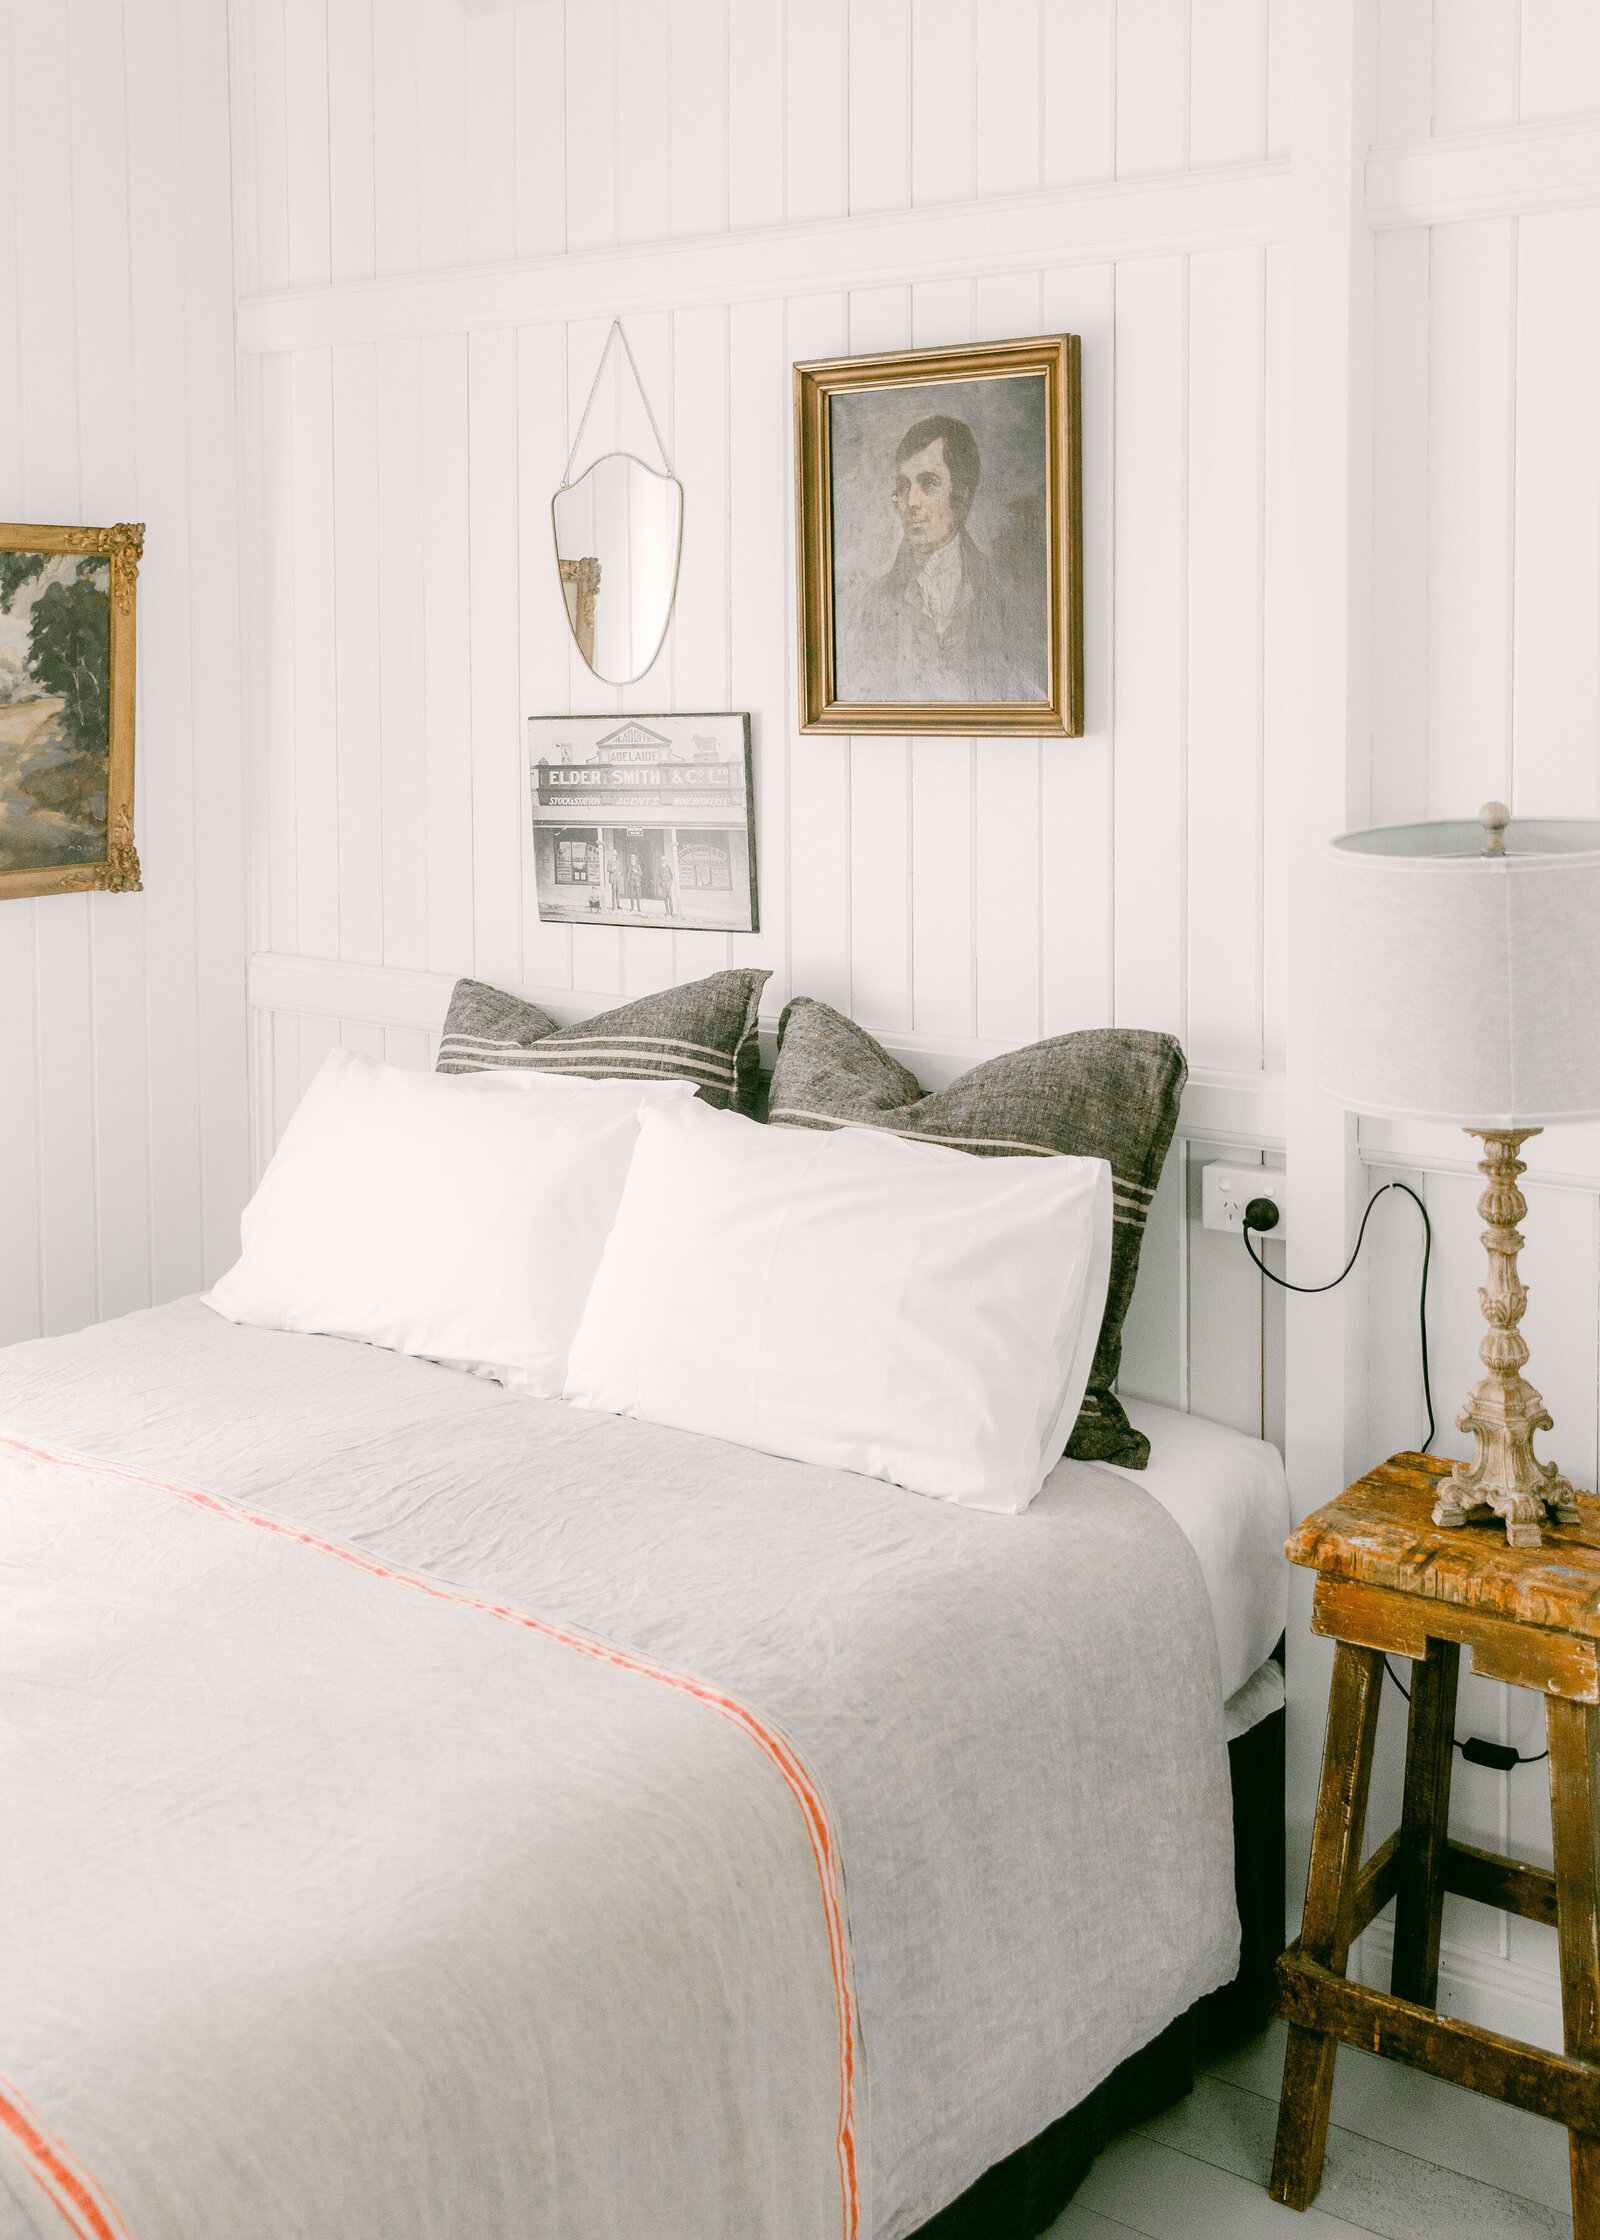 Chelsea Loren Airbnb interior design branding photographer for a white vintage Airbnb in Queensland, Australia